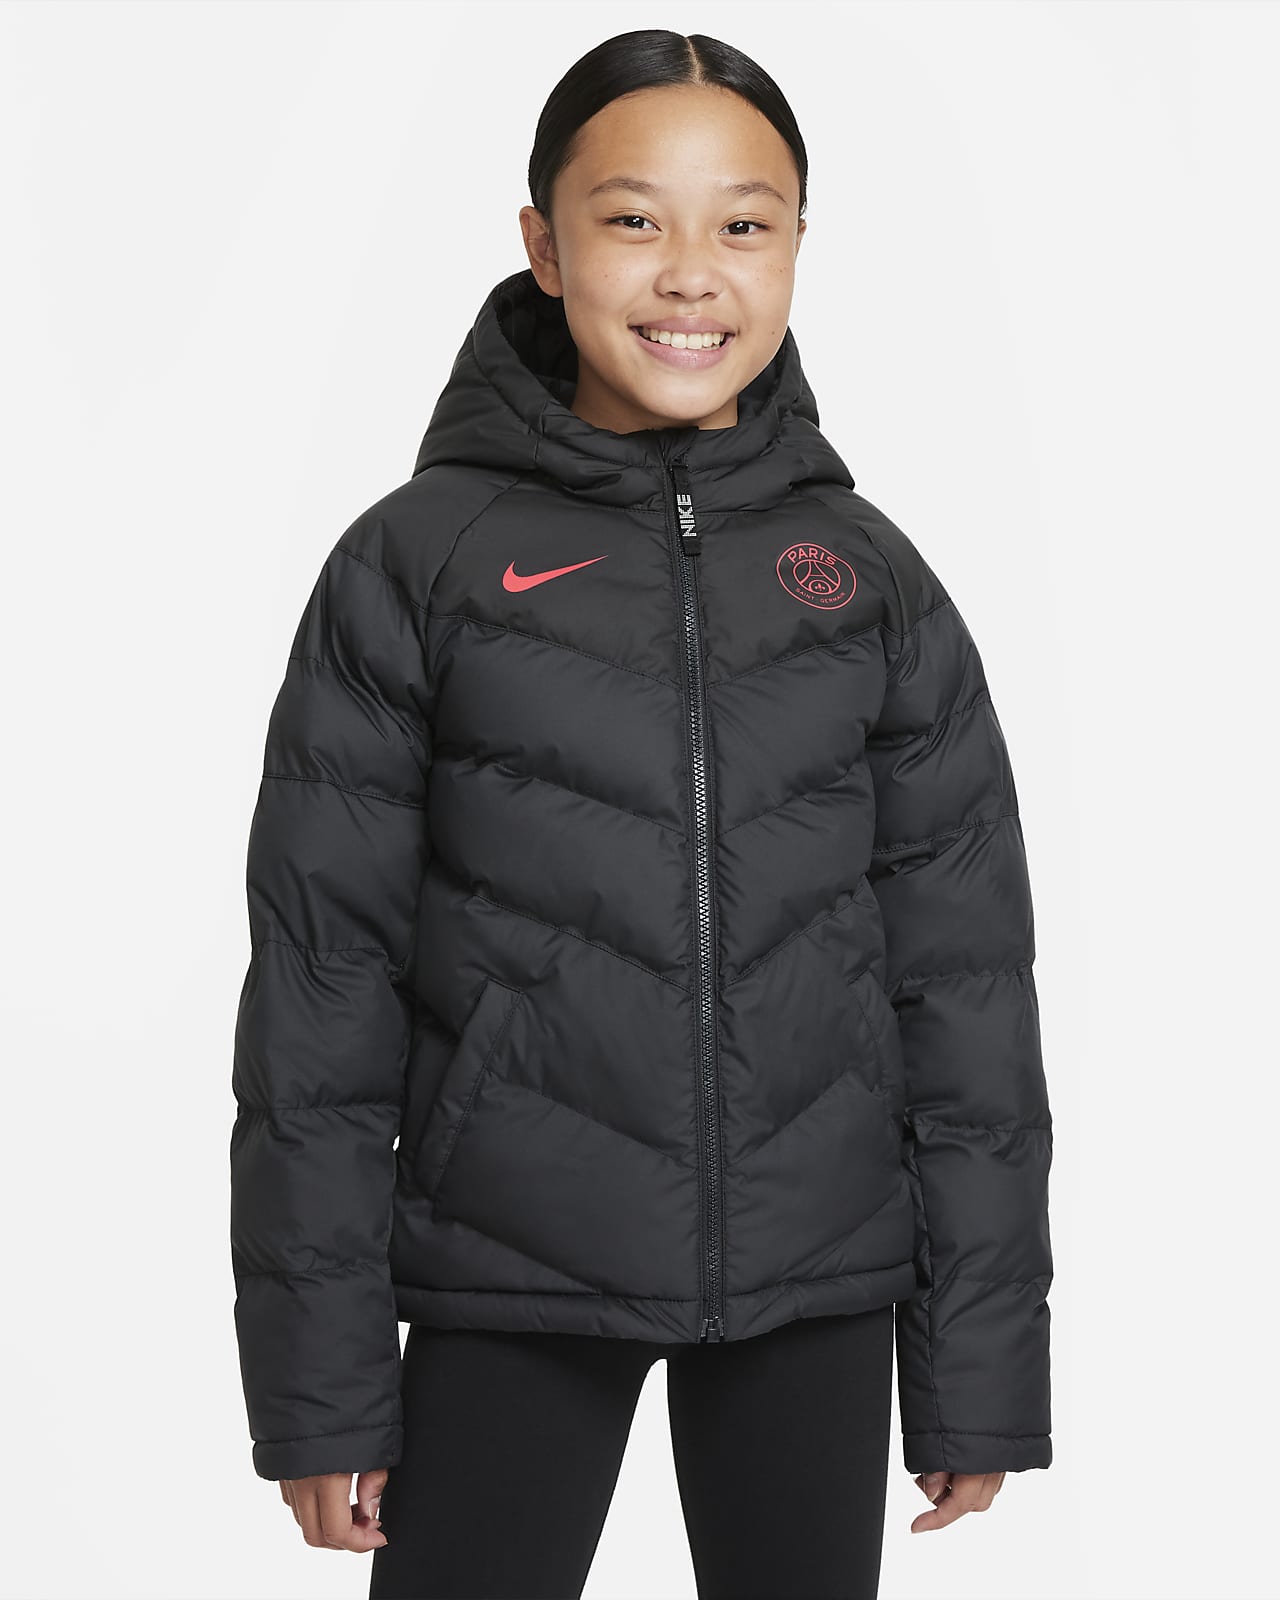 Nike Sportswear Paris Saint-Germain Older Kids' Jacket